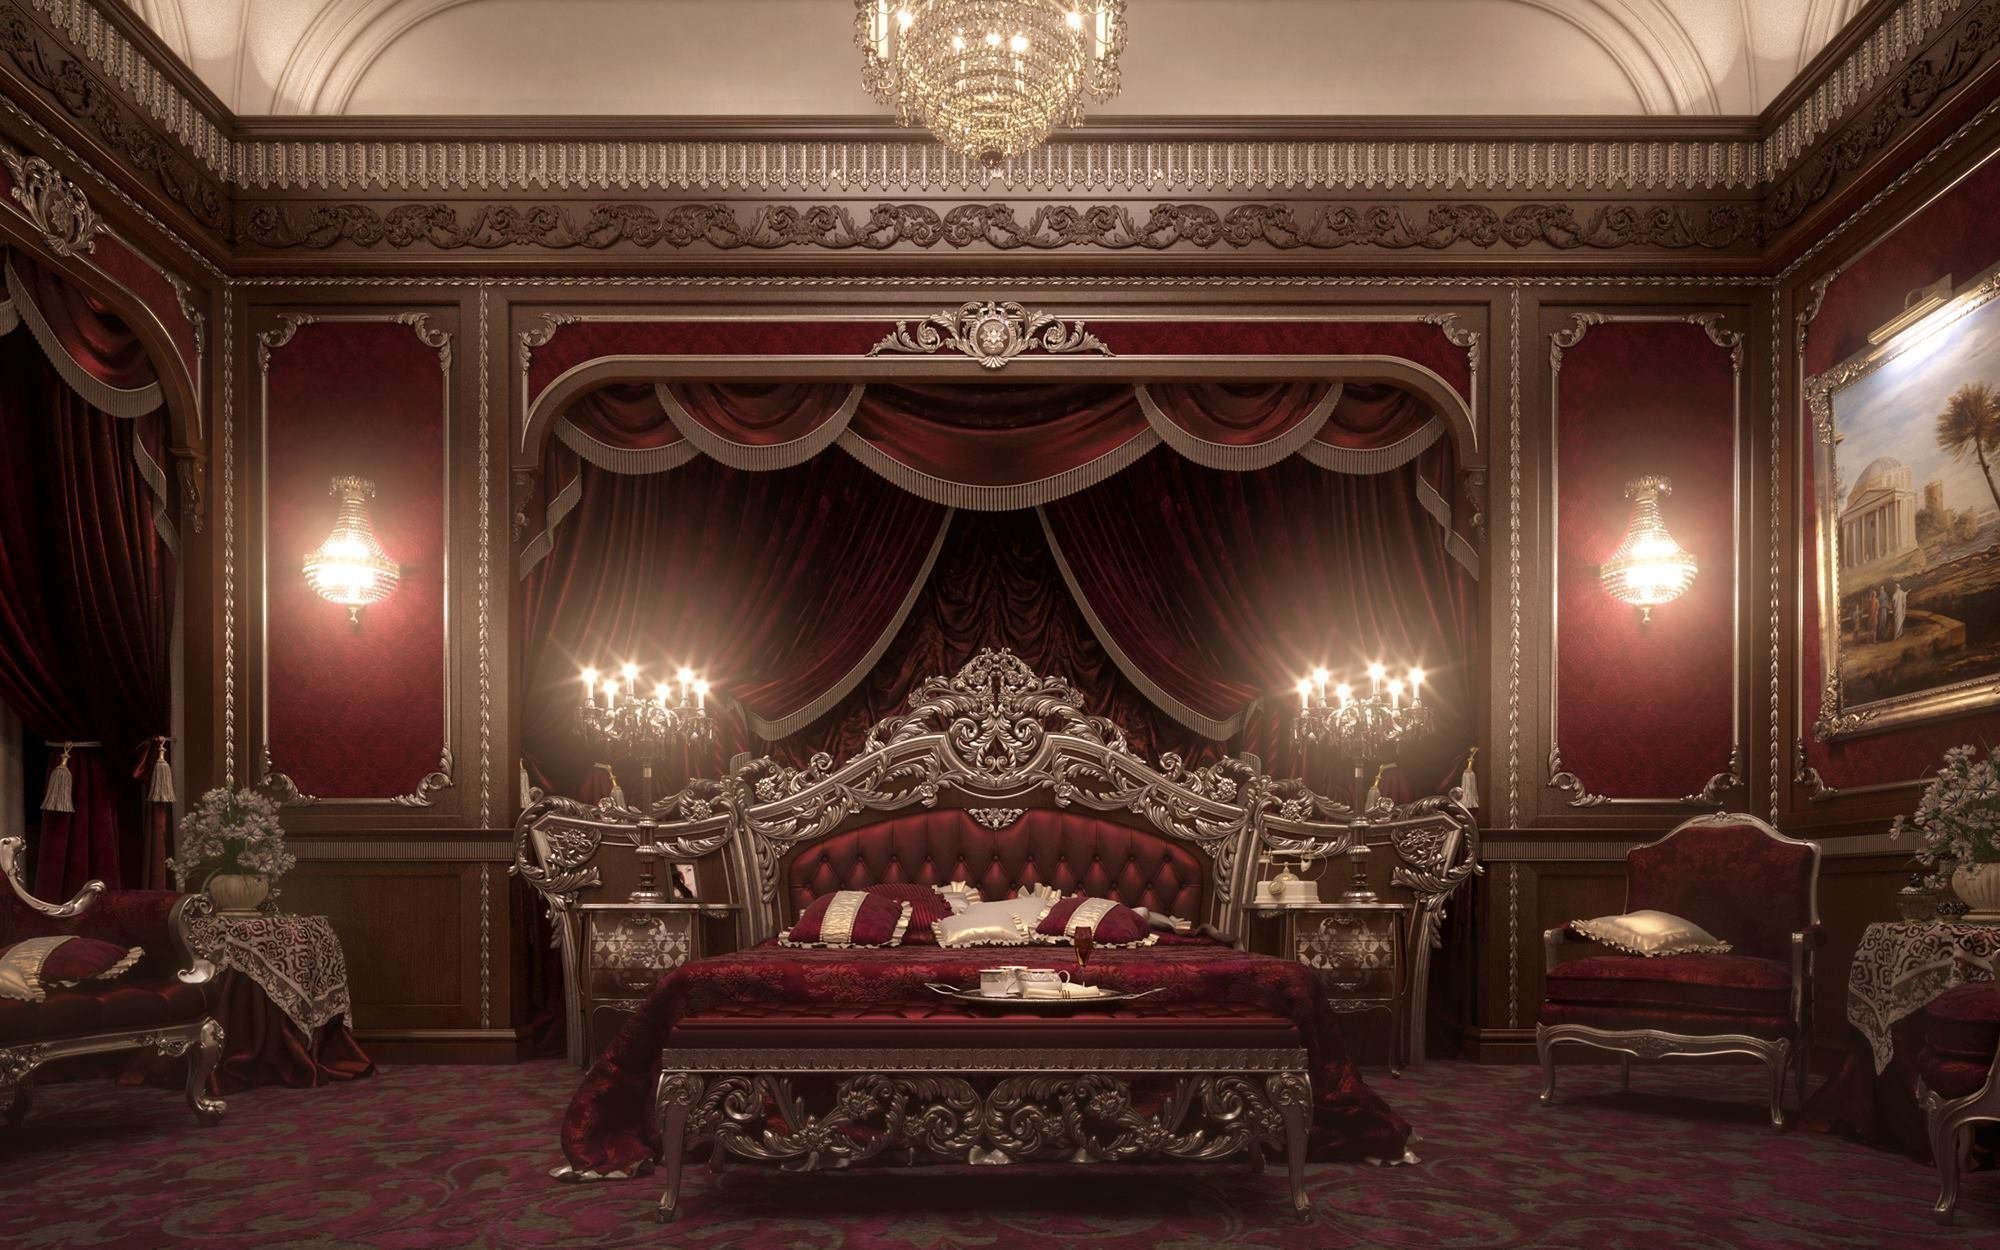 Спальня в стиле ампир